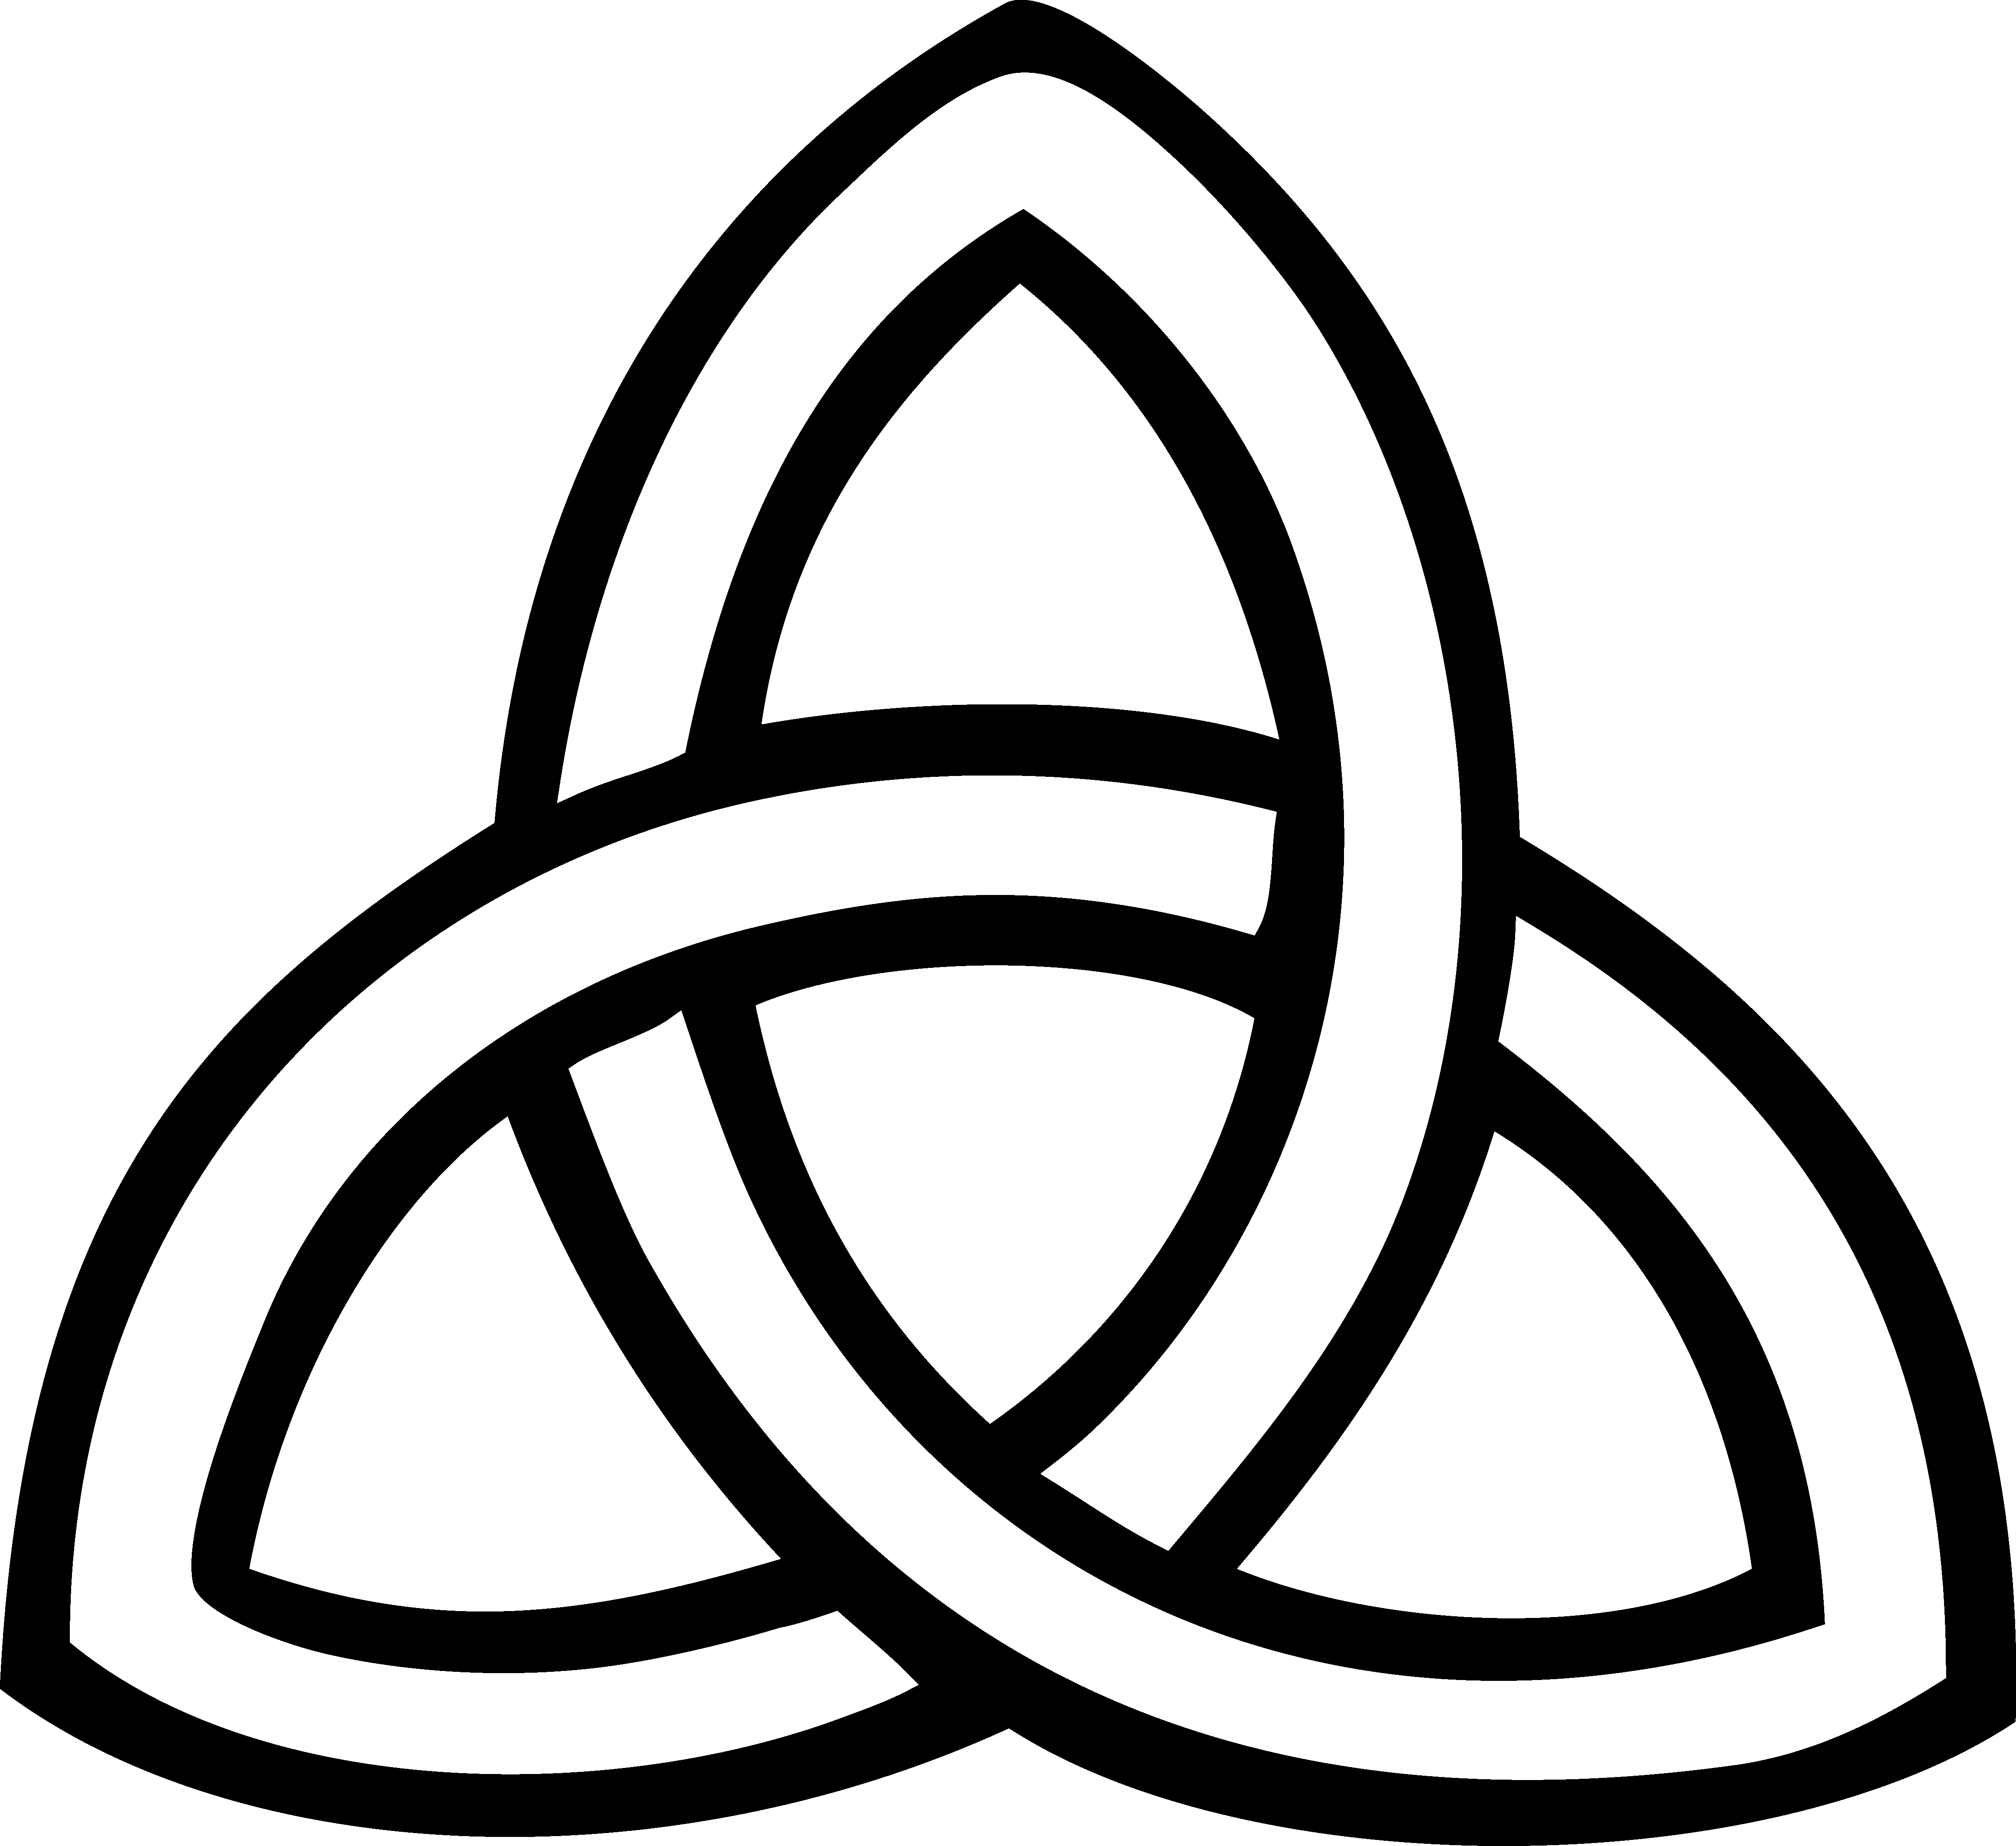 trinity symbol, infinite interlocking shape